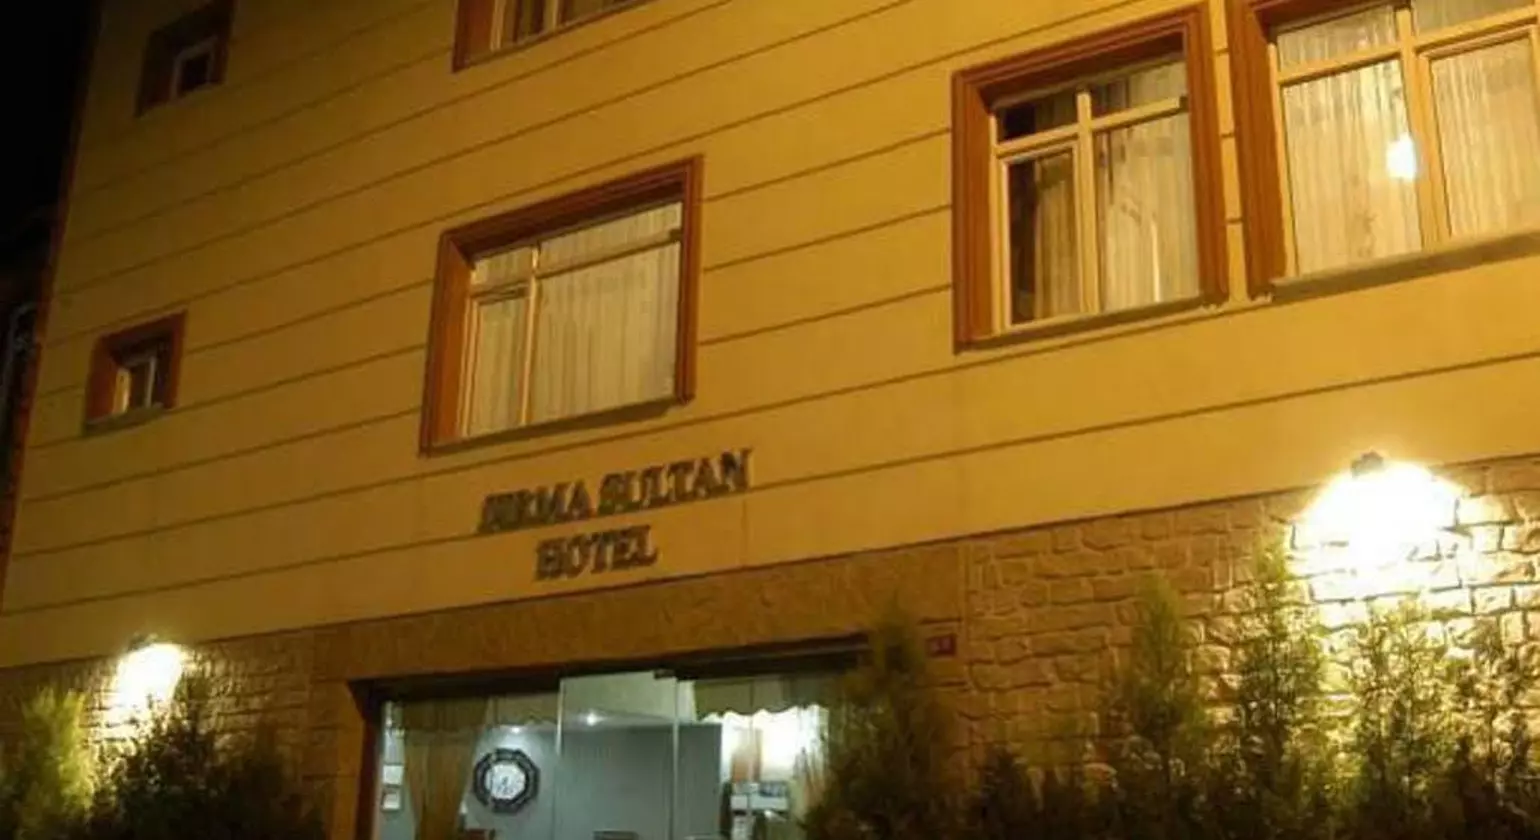 Sirma Sultan Hotel